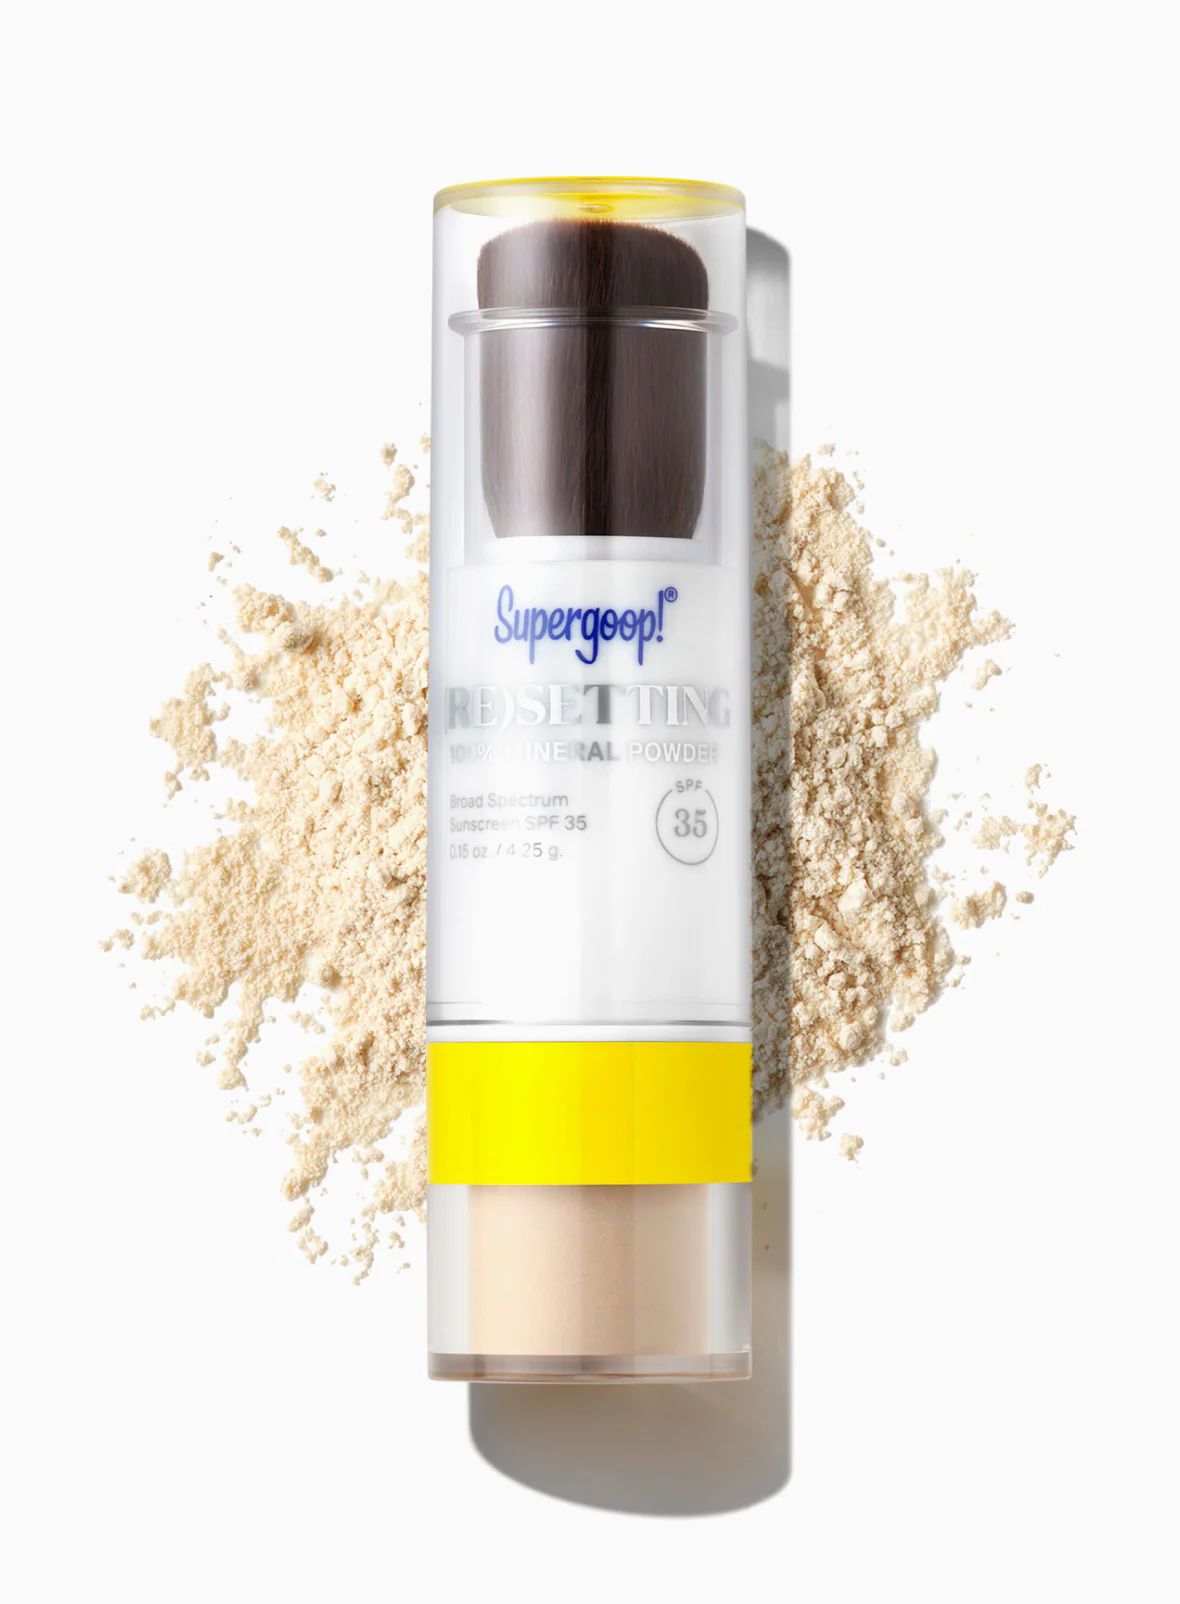 (Re)setting 100% Mineral Powder SPF 35 | Supergoop